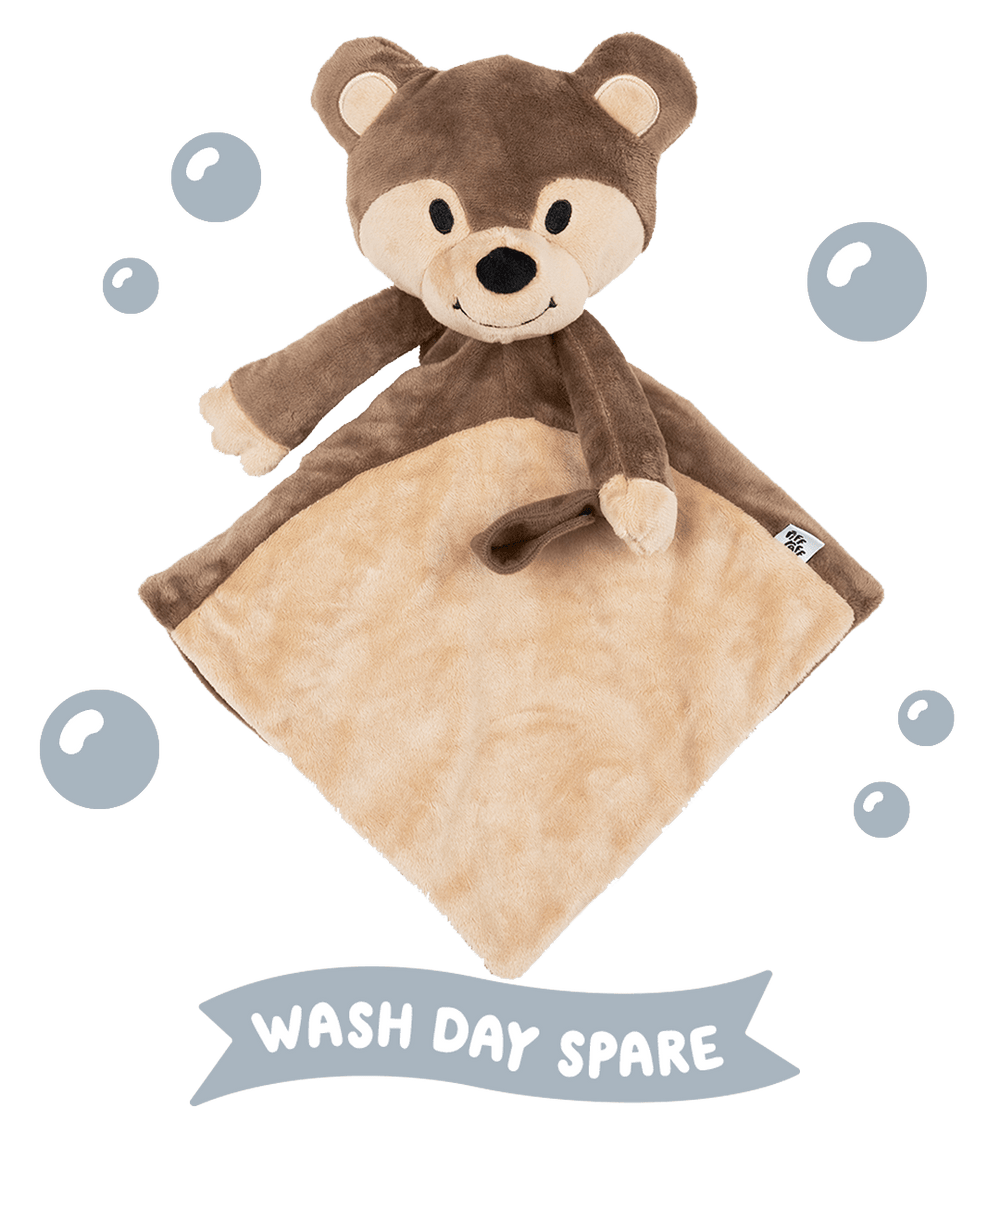 Wash Day Spare Plush - Banjo The Bear (no soundbox included) Riff Raff & Co Sleep Toys 